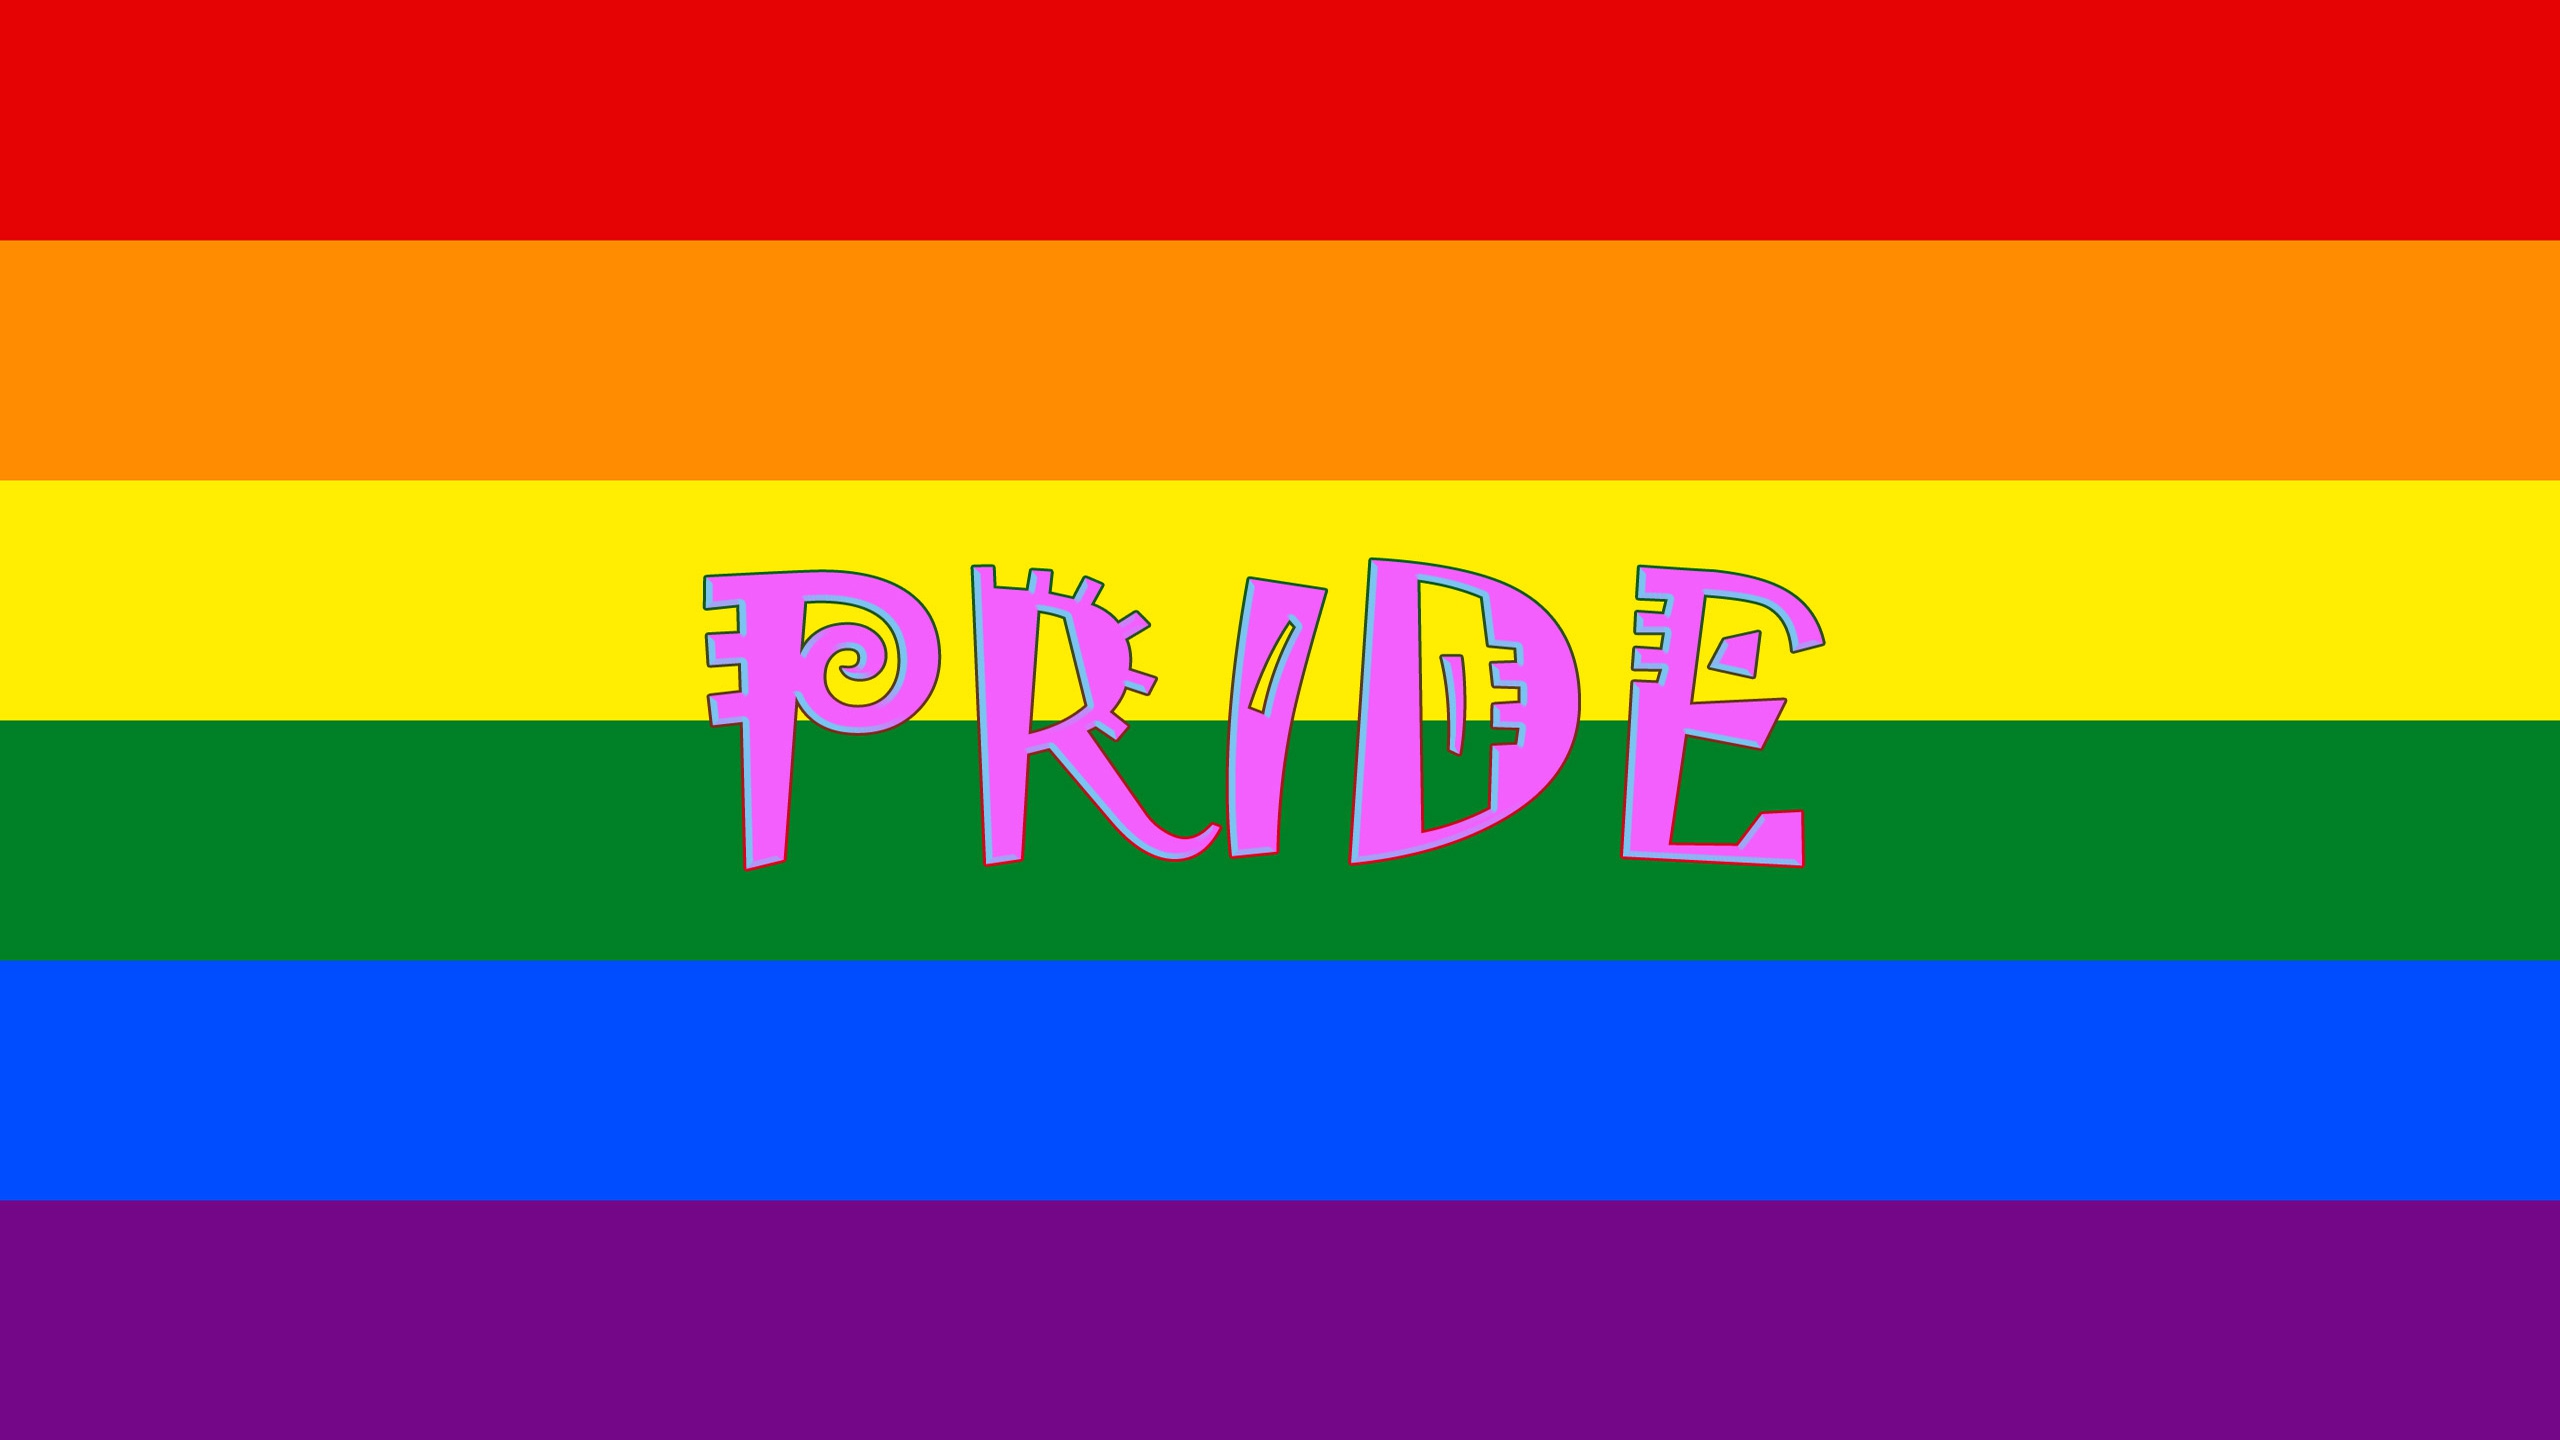 bmp images free download gay pride